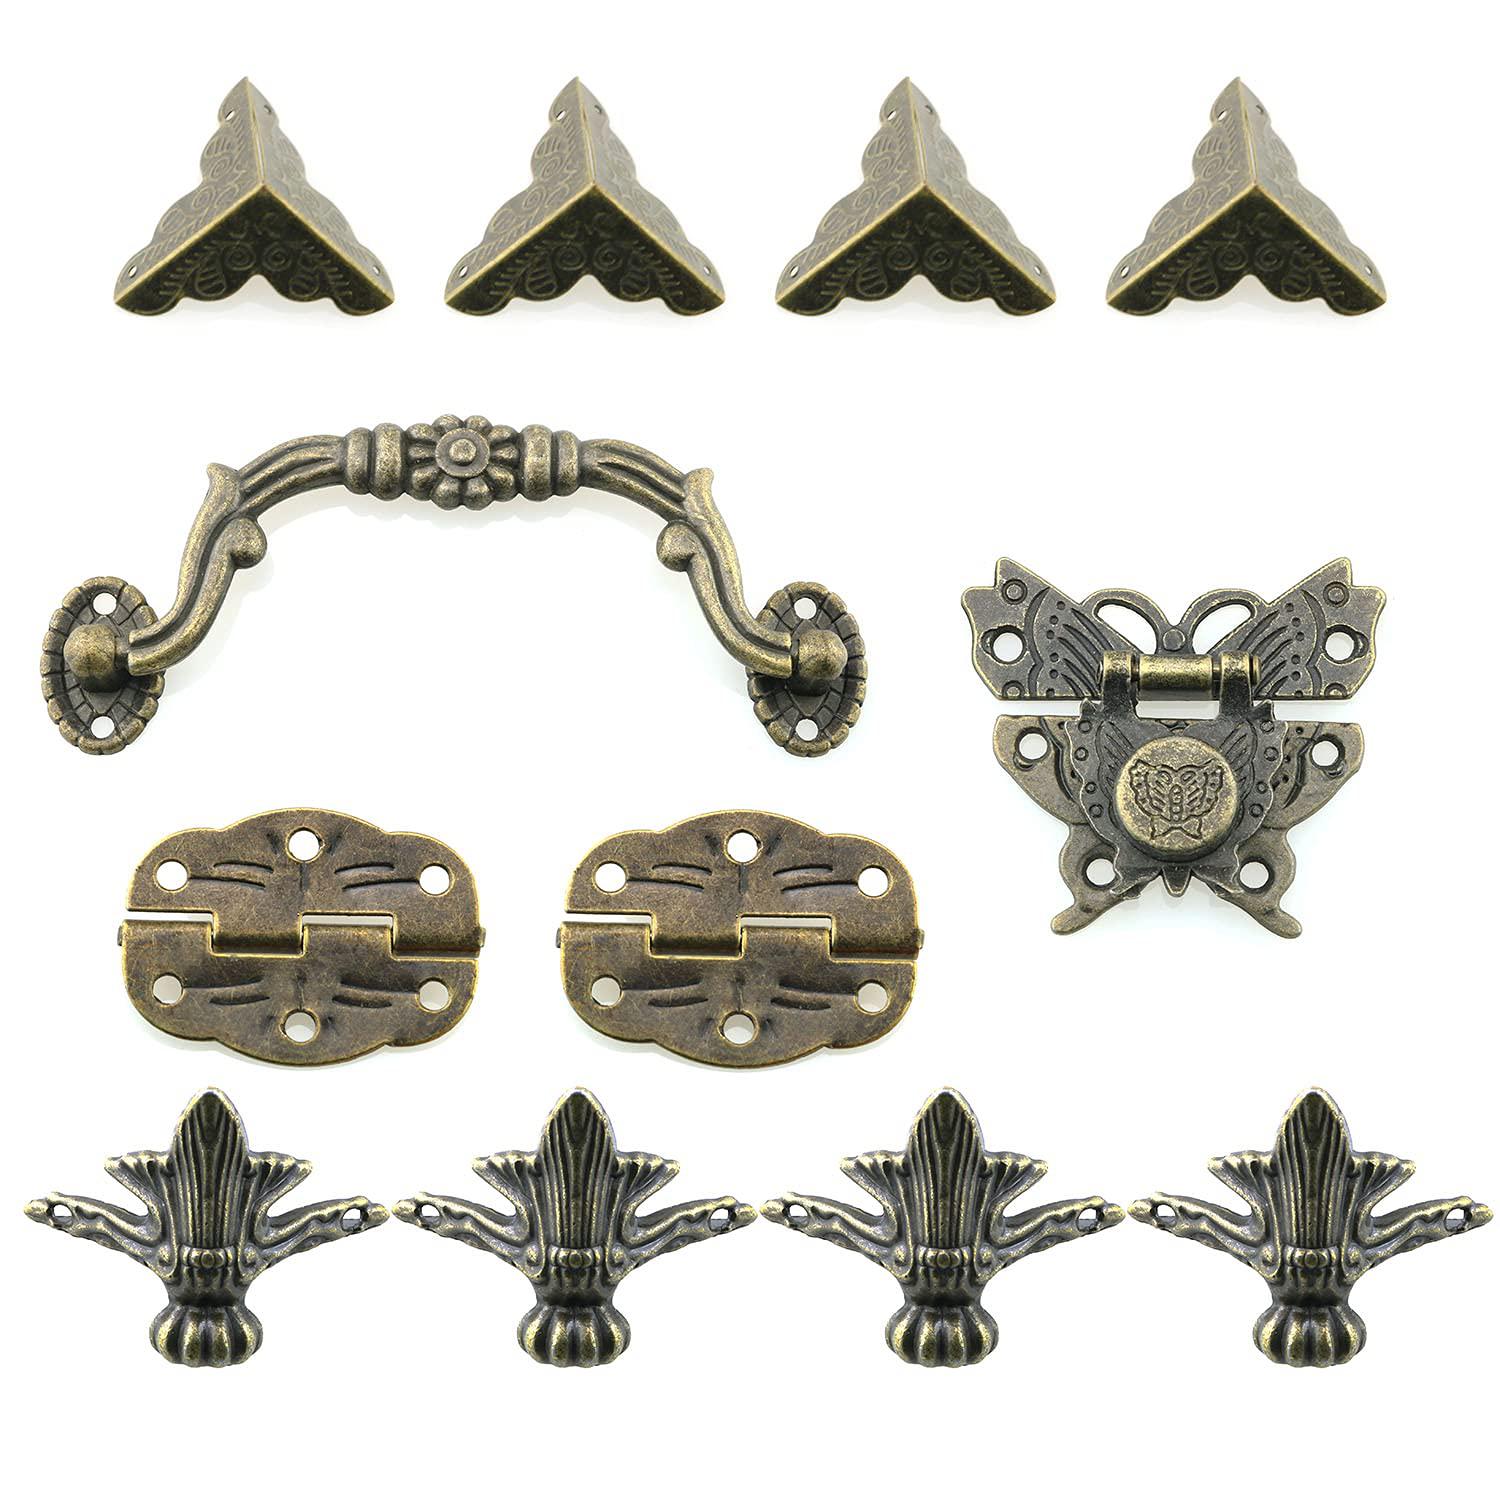 yhxixi 12pcs jewelry box antique lock latch hasp hinges handle box corner protectors kit - include 1 antique lock latch hasp 